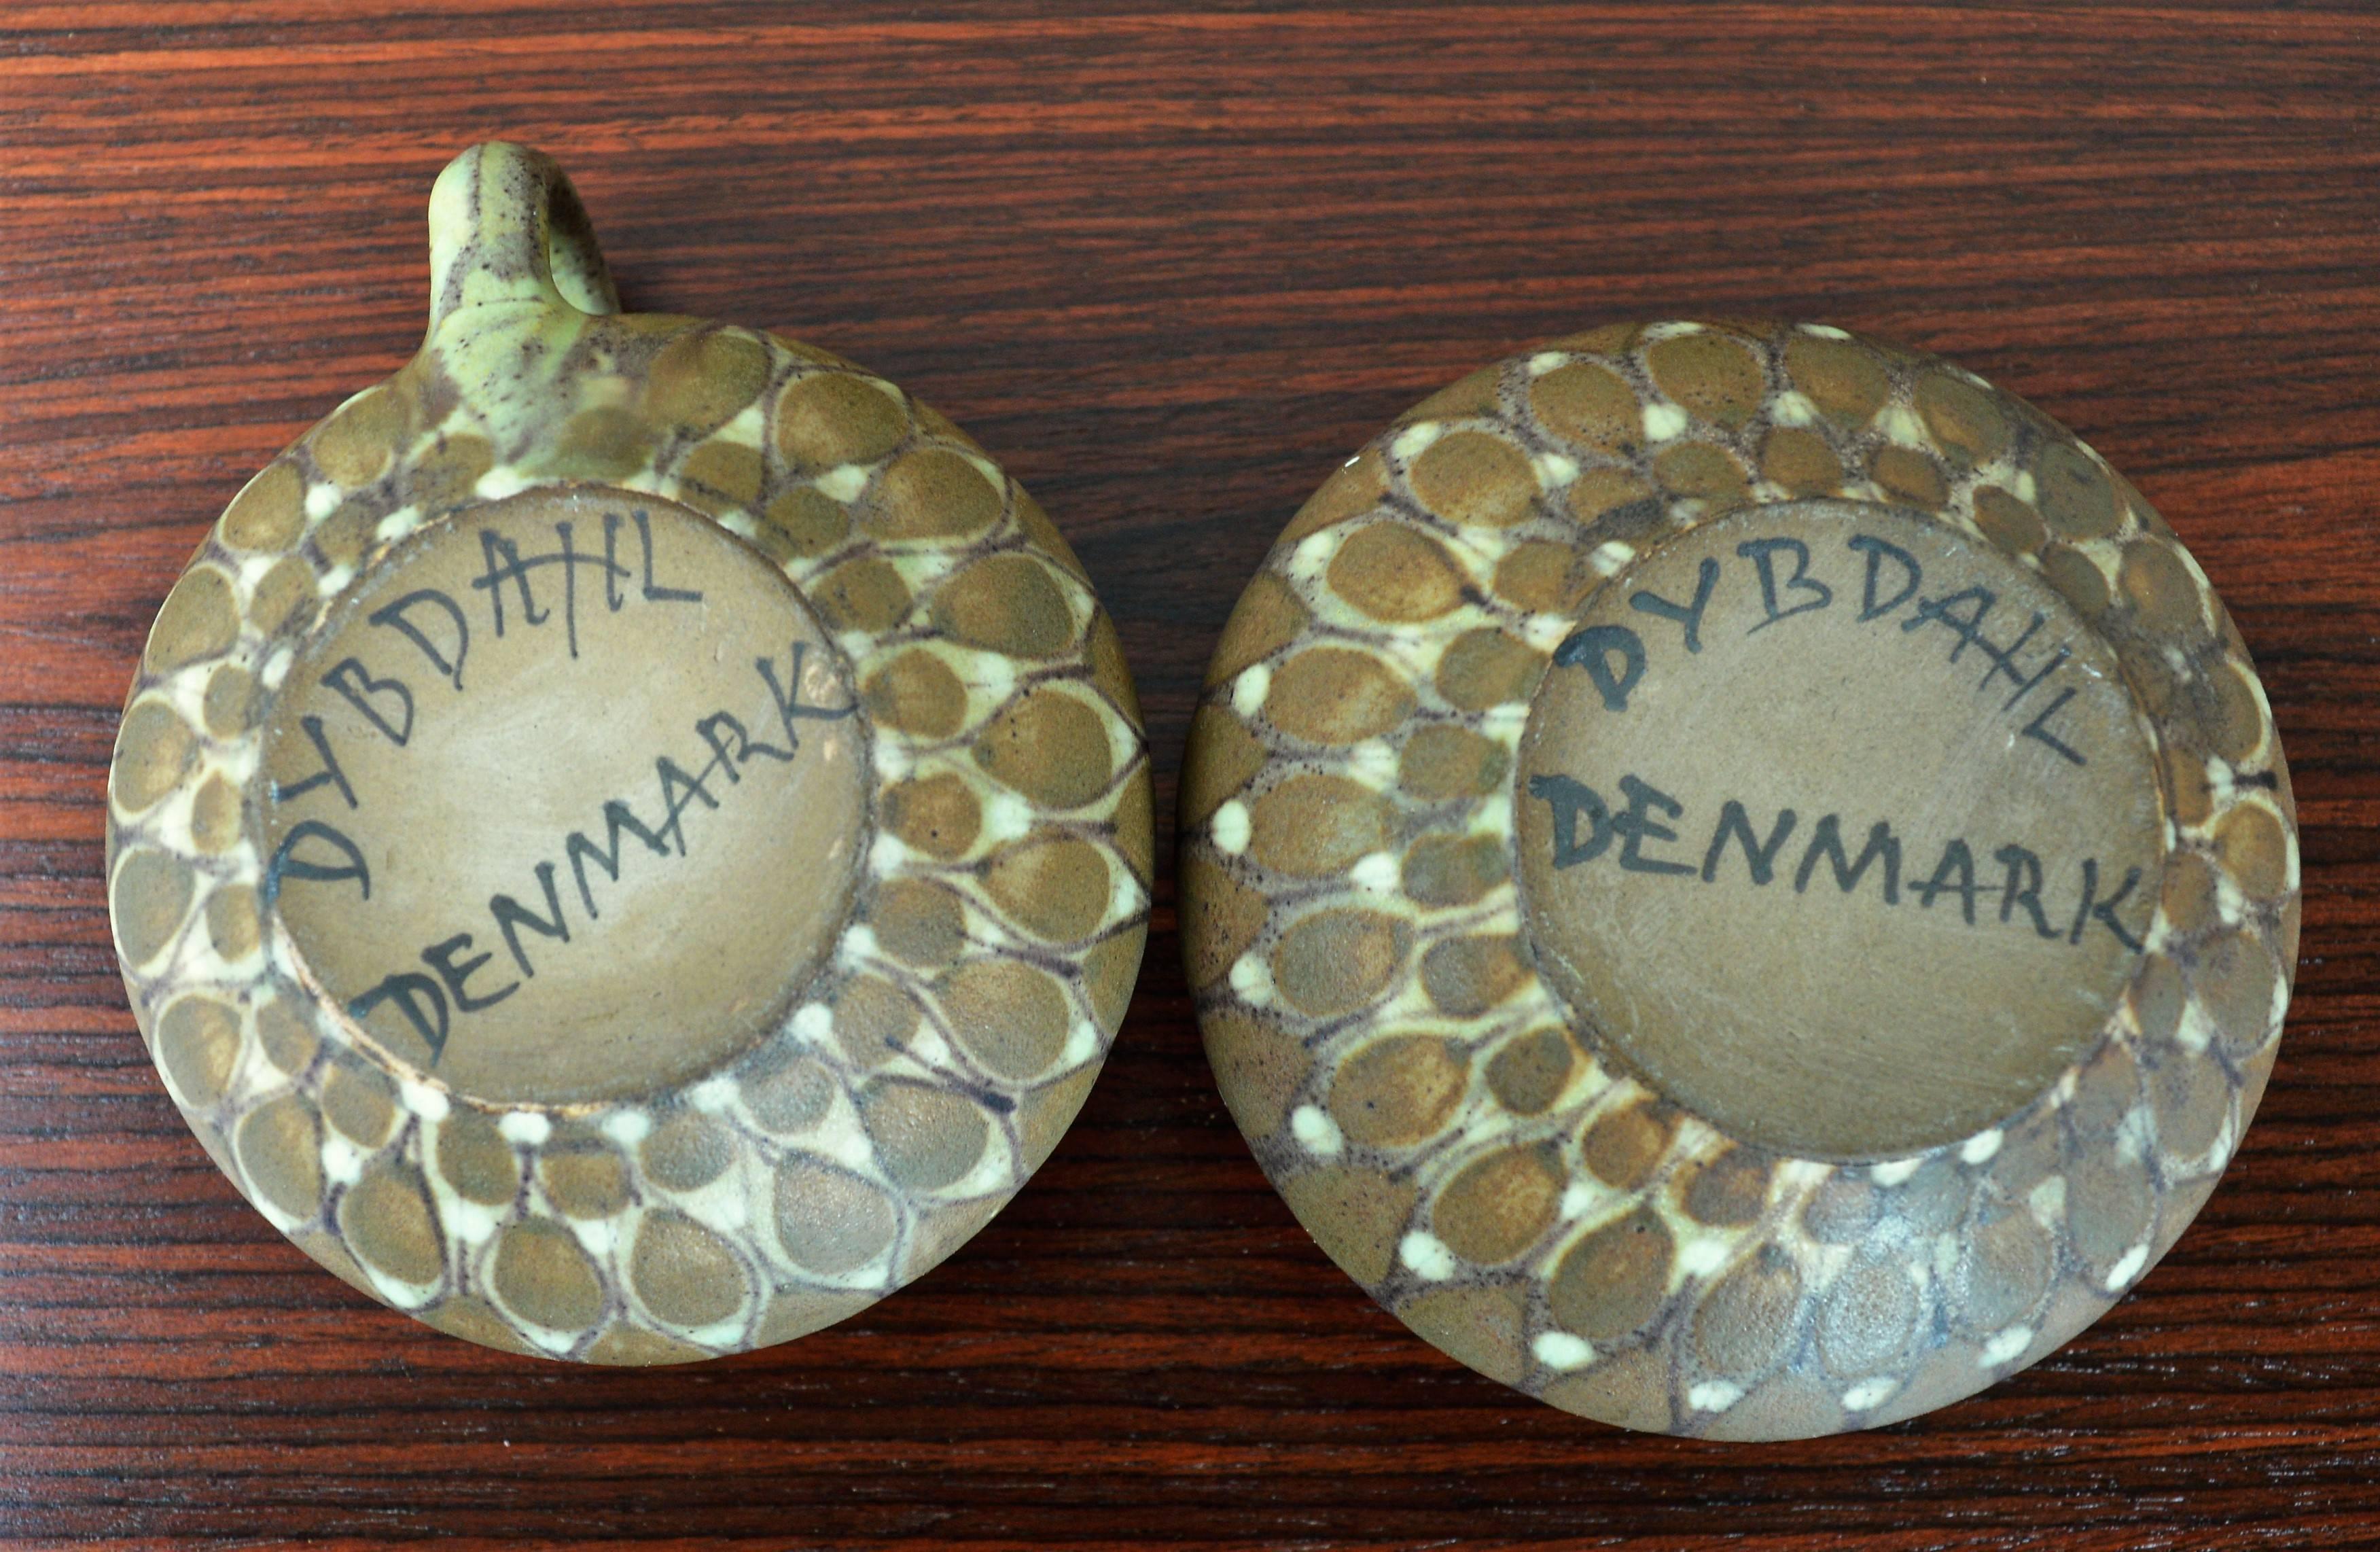 Margrethe Dybdahl Denmark Ceramic Platter with Handles, Sugar Bowl & Creamer For Sale 2